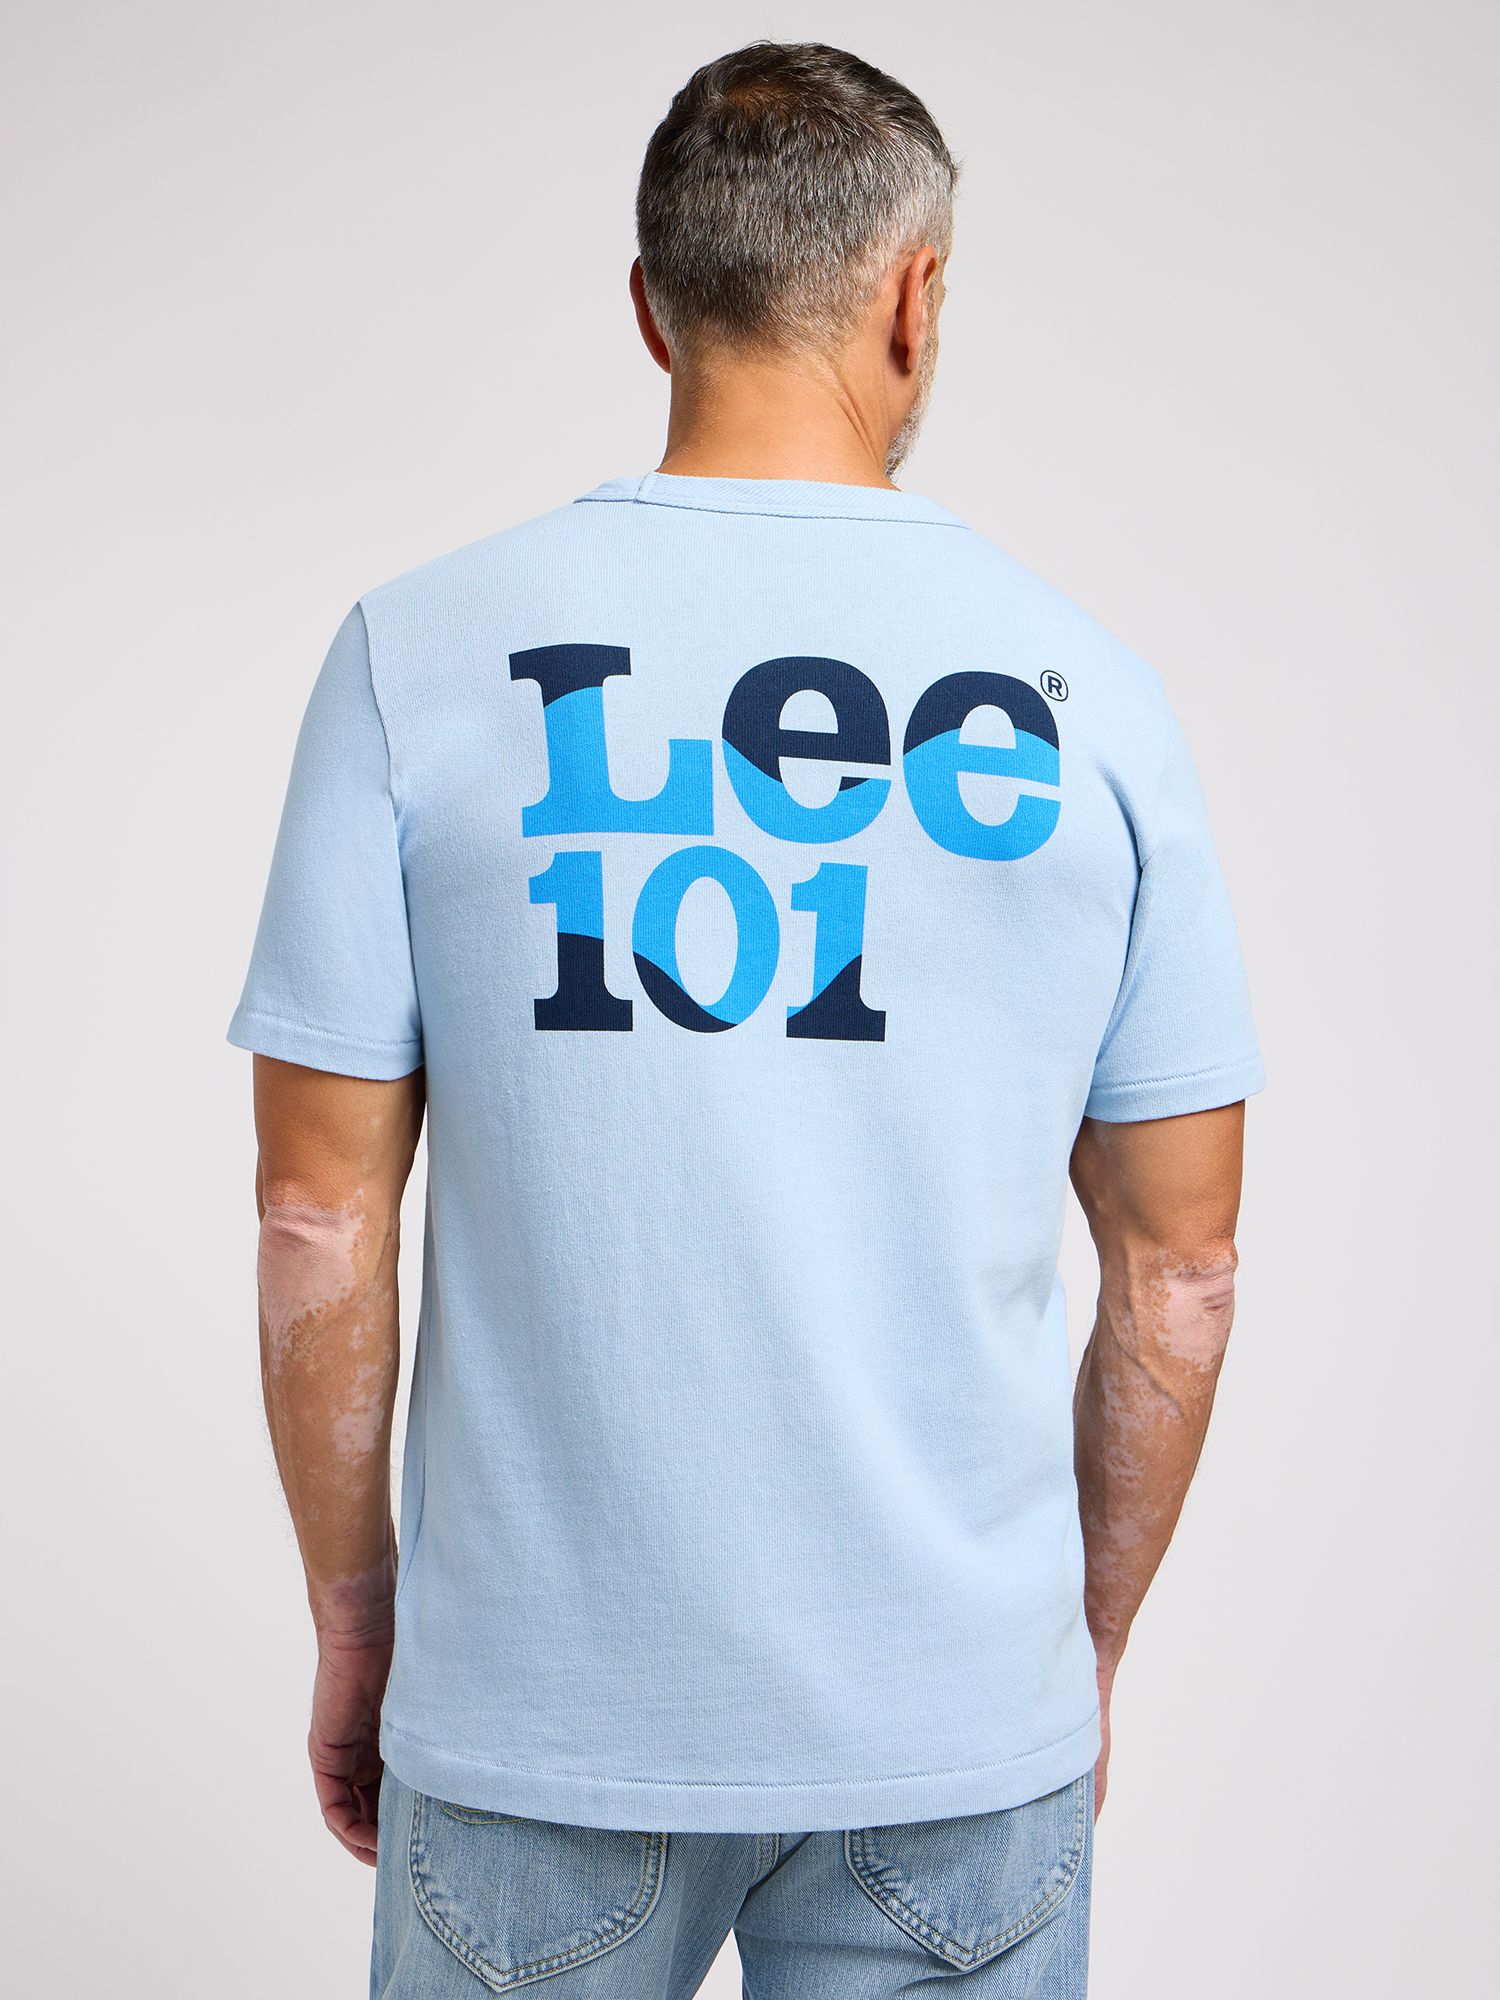 Lee 101 Cotton T-Shirt, Light Blue, S